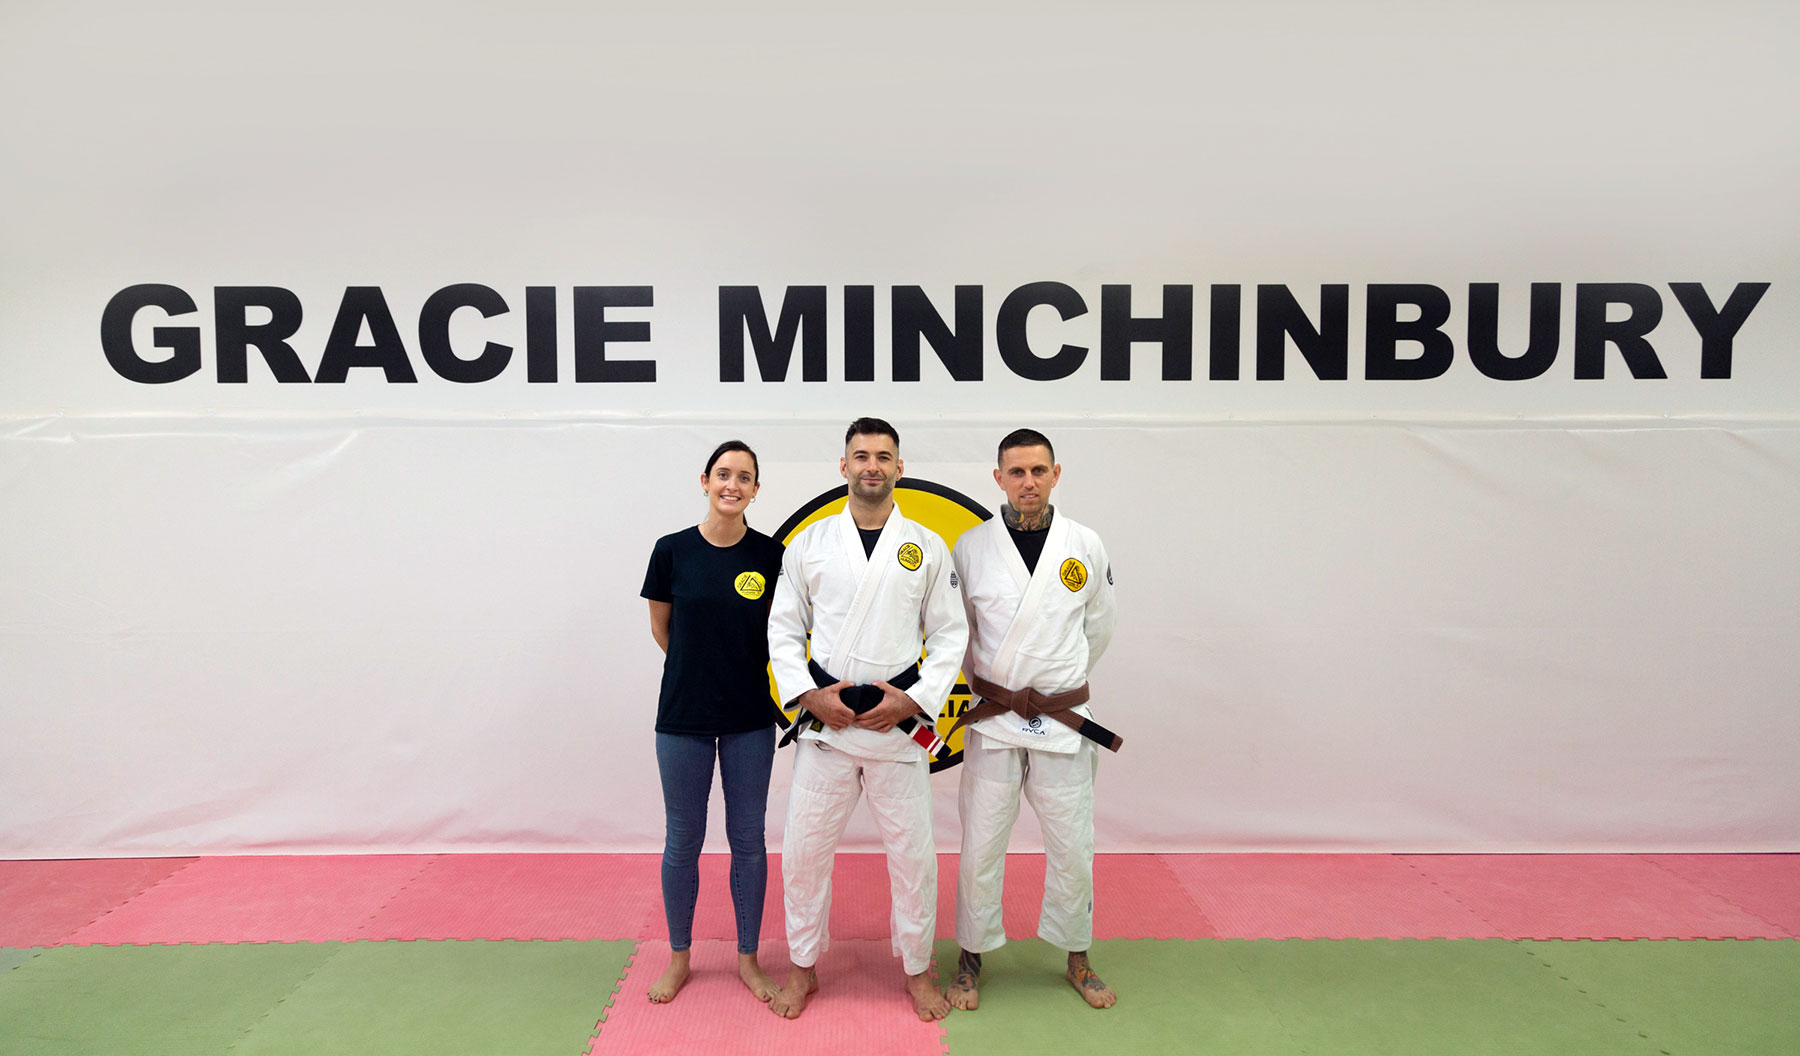 gracie minchinbury brazilian jiu jitsu instructors and staff